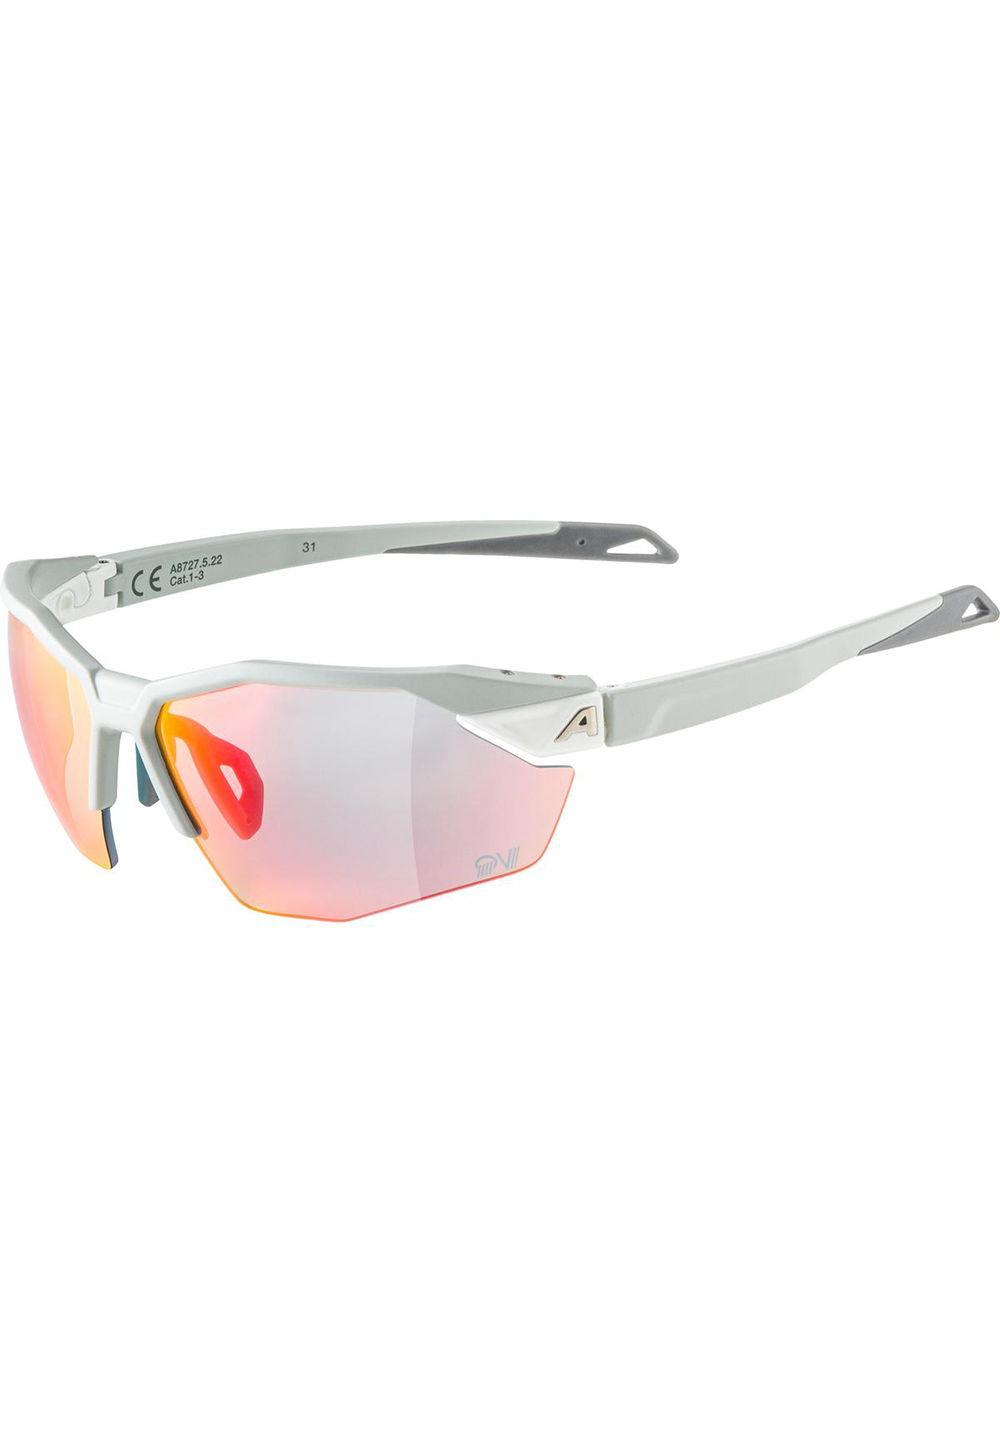 Alpina Sportbrille TWIST SIX S HR QV A8727.5.11 white matt